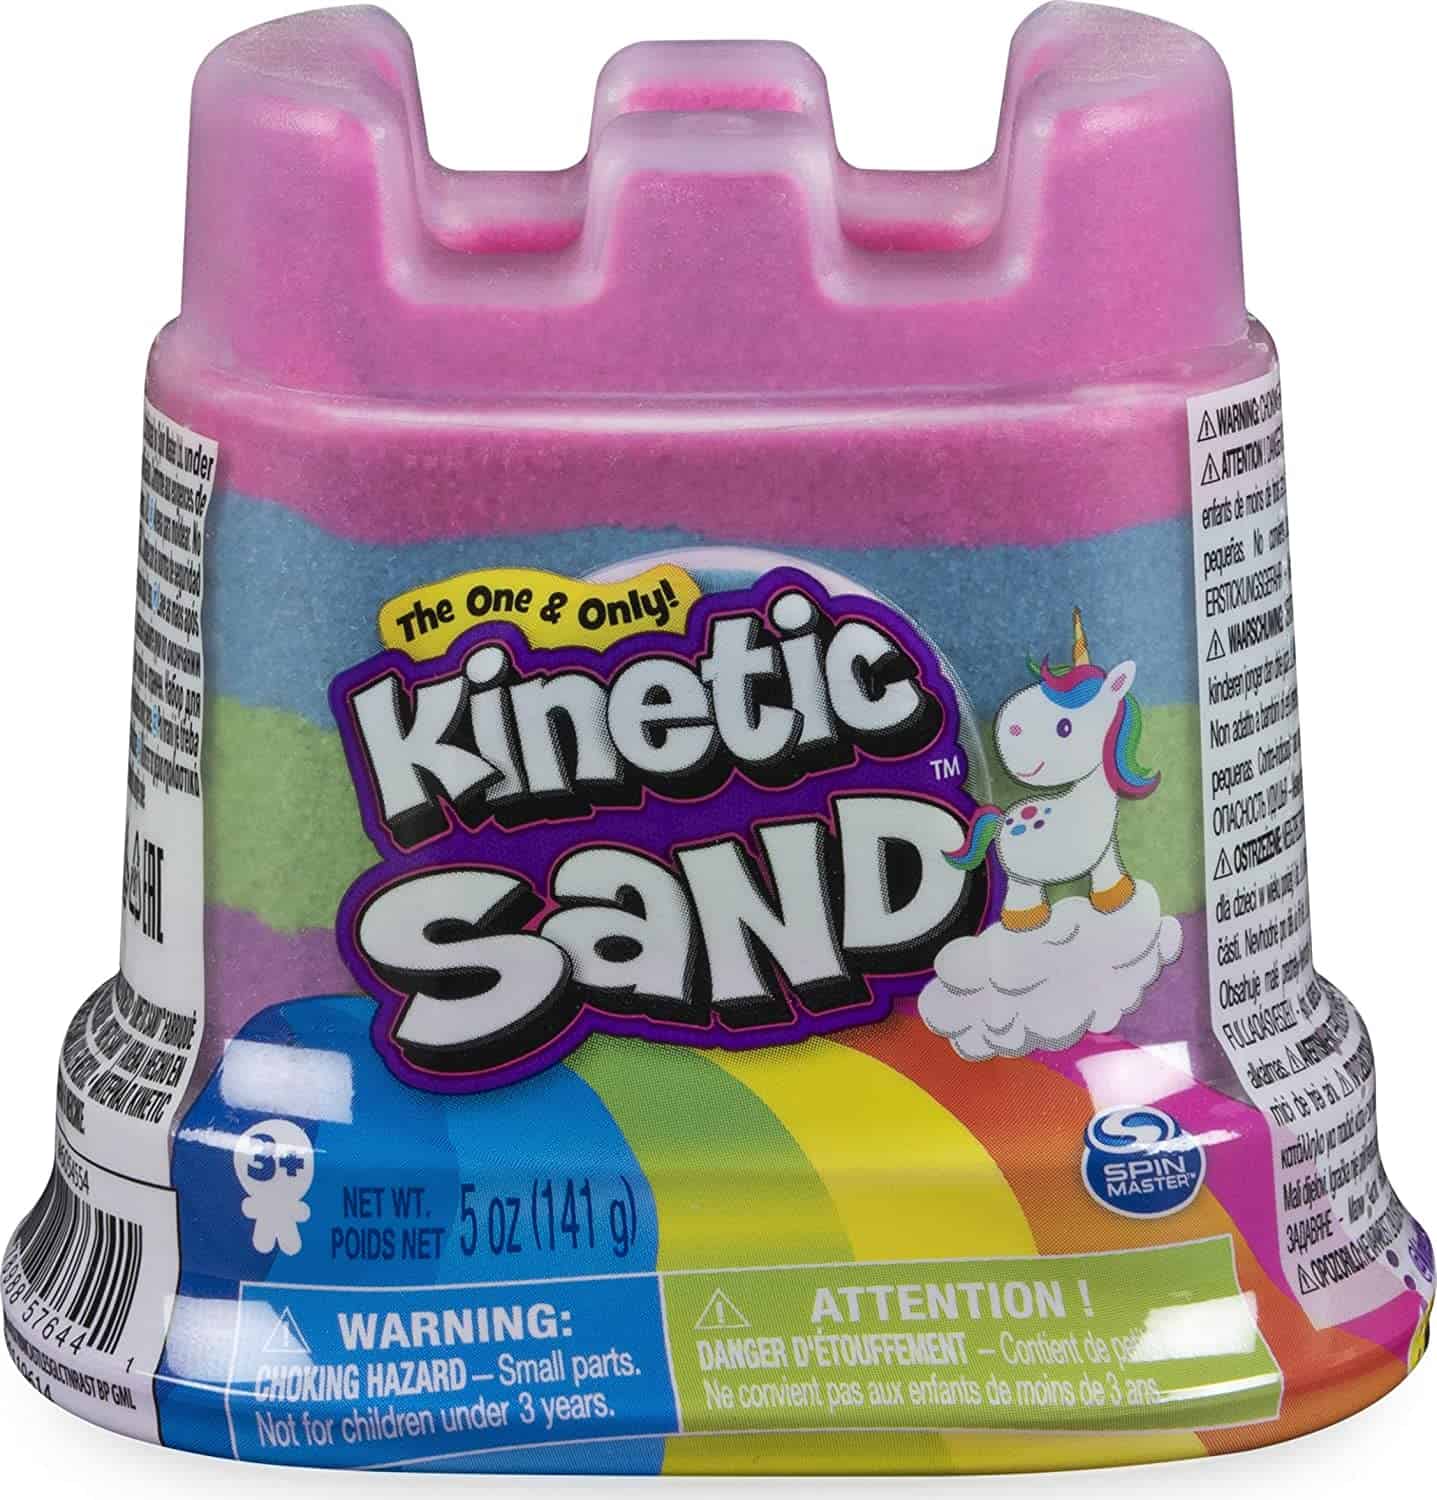 Kinetic Sand with rainbow colors and unicorn theme